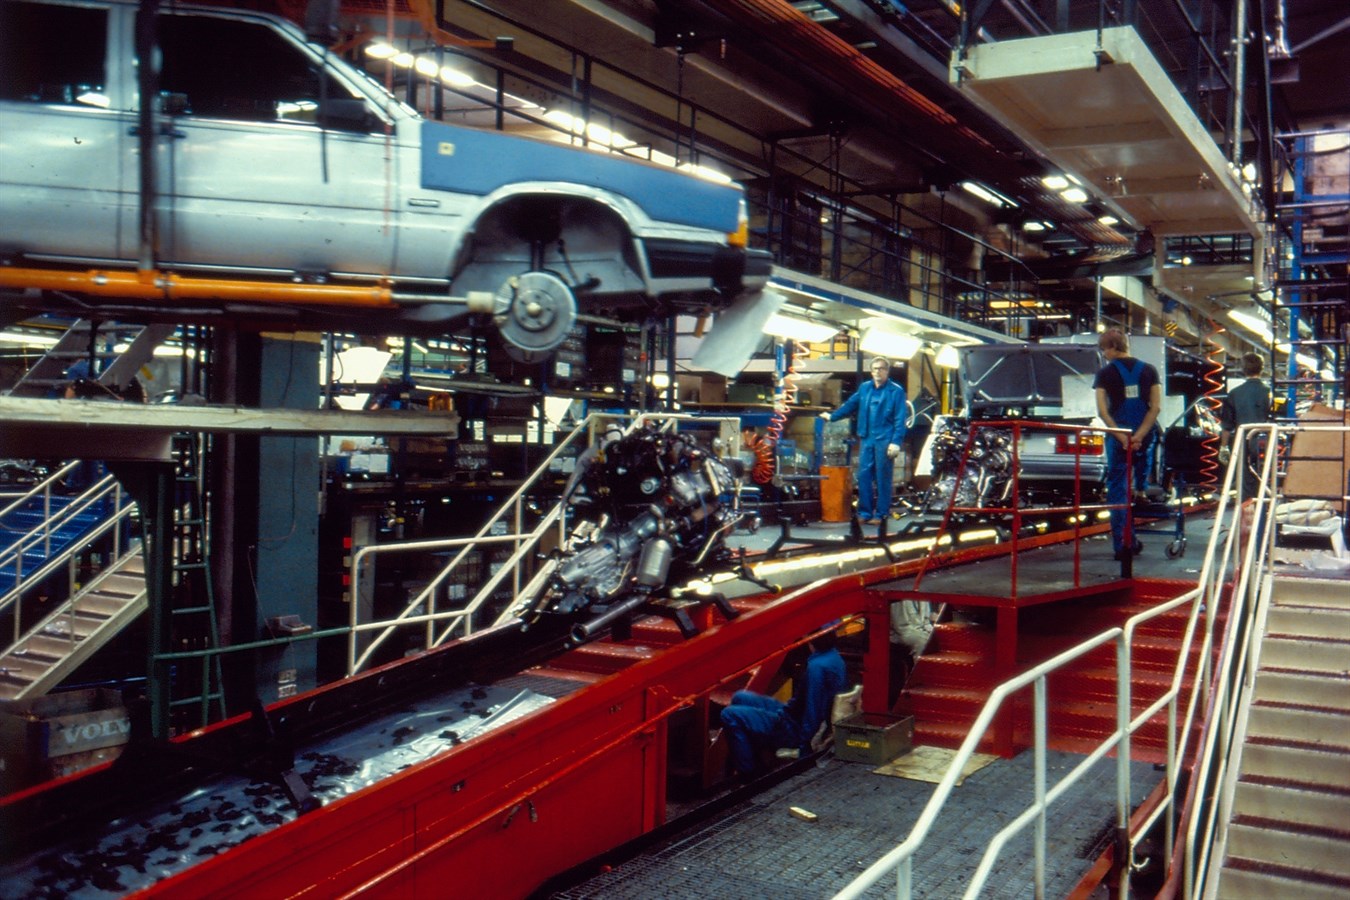 The Volvo Cars plant in Torslanda celebrates its 50th anniversary in 2014